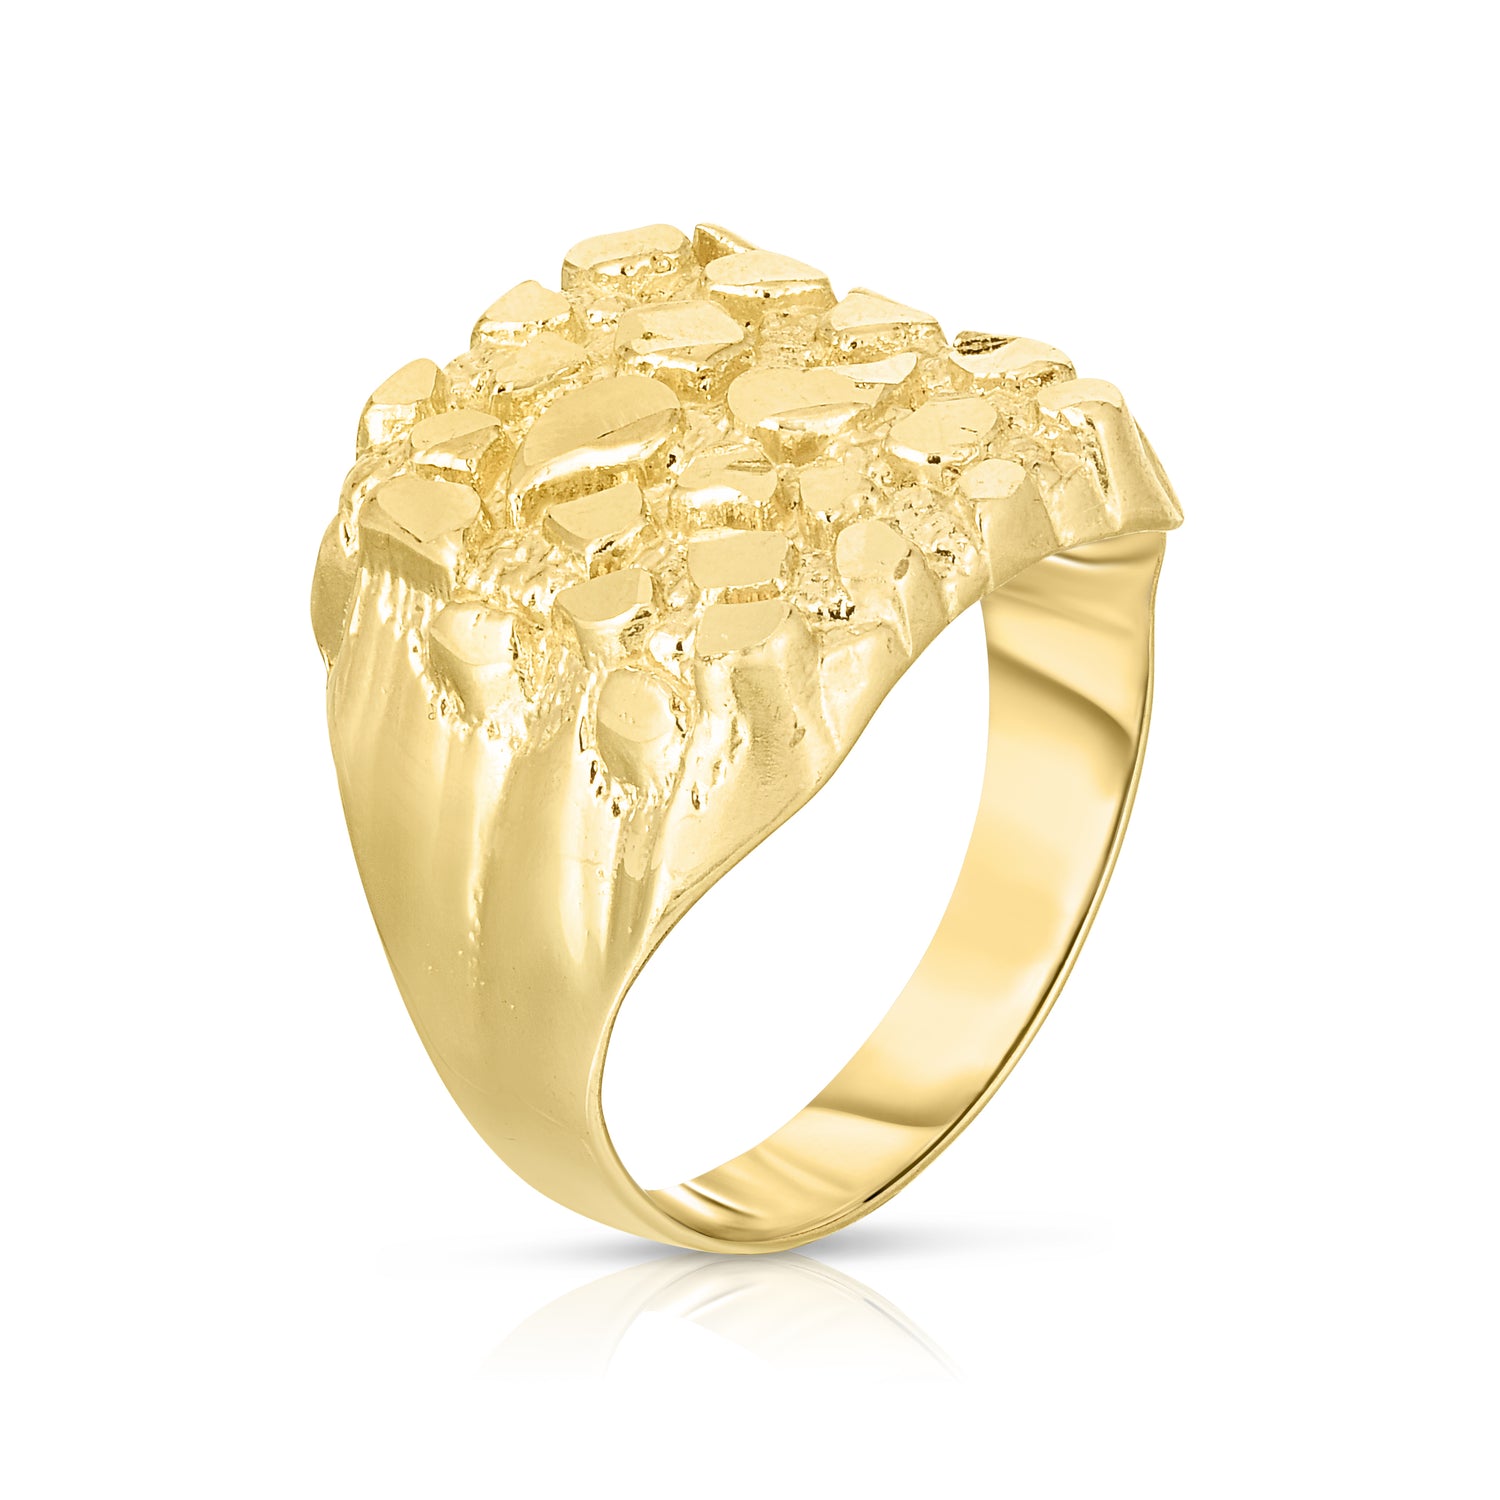 Floreo Men's 10k Yellow Gold 17.5mm Lite Square Nugget Ring